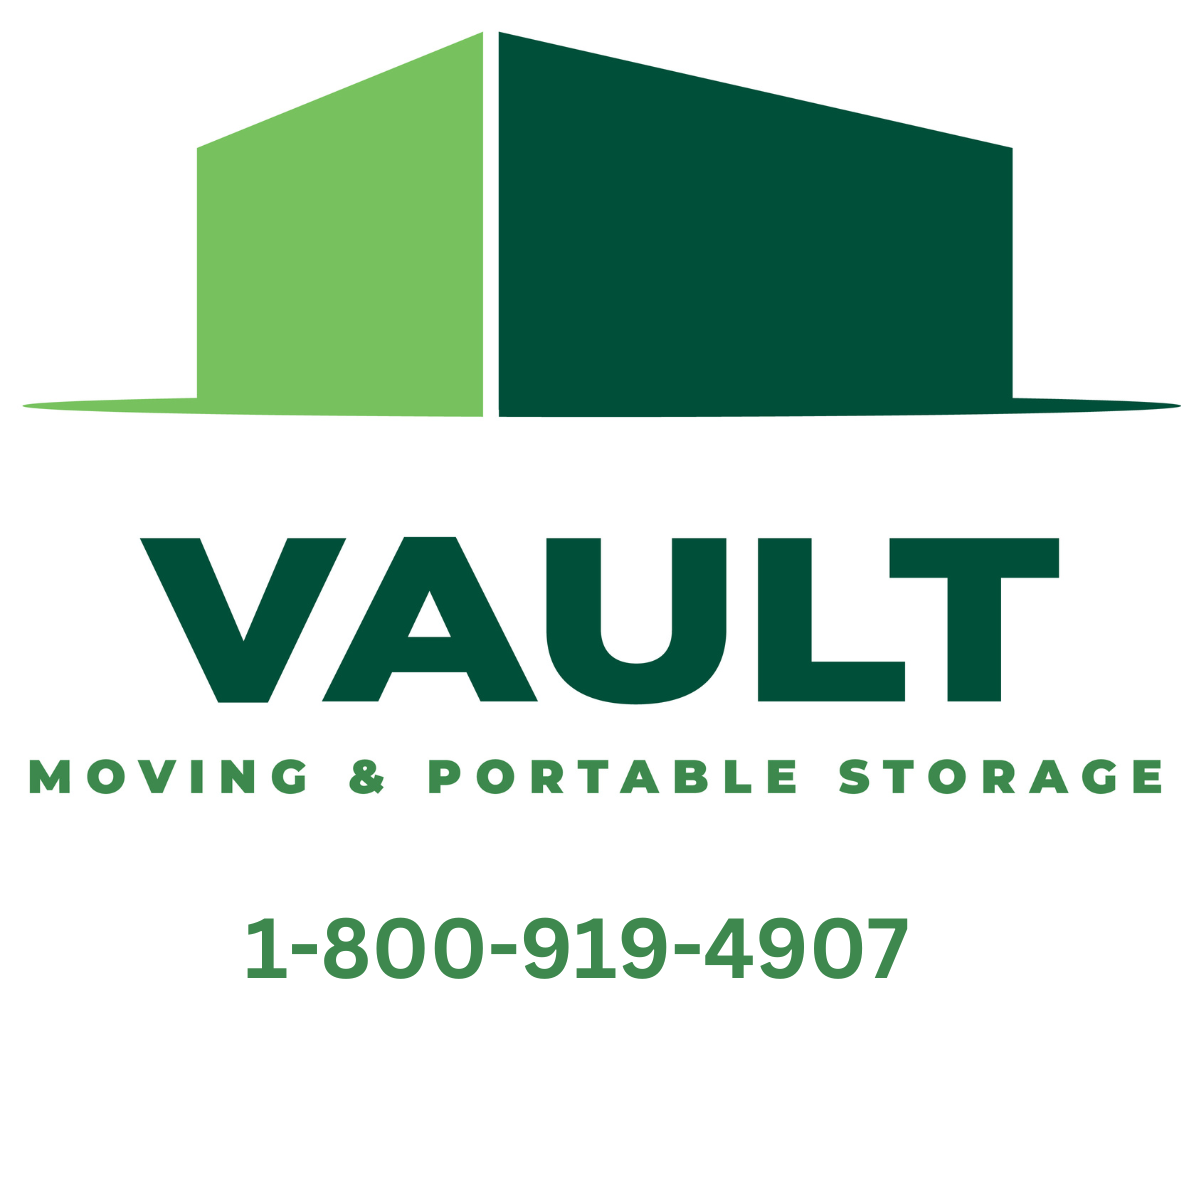 Vault Moving & Portable Storage Logo